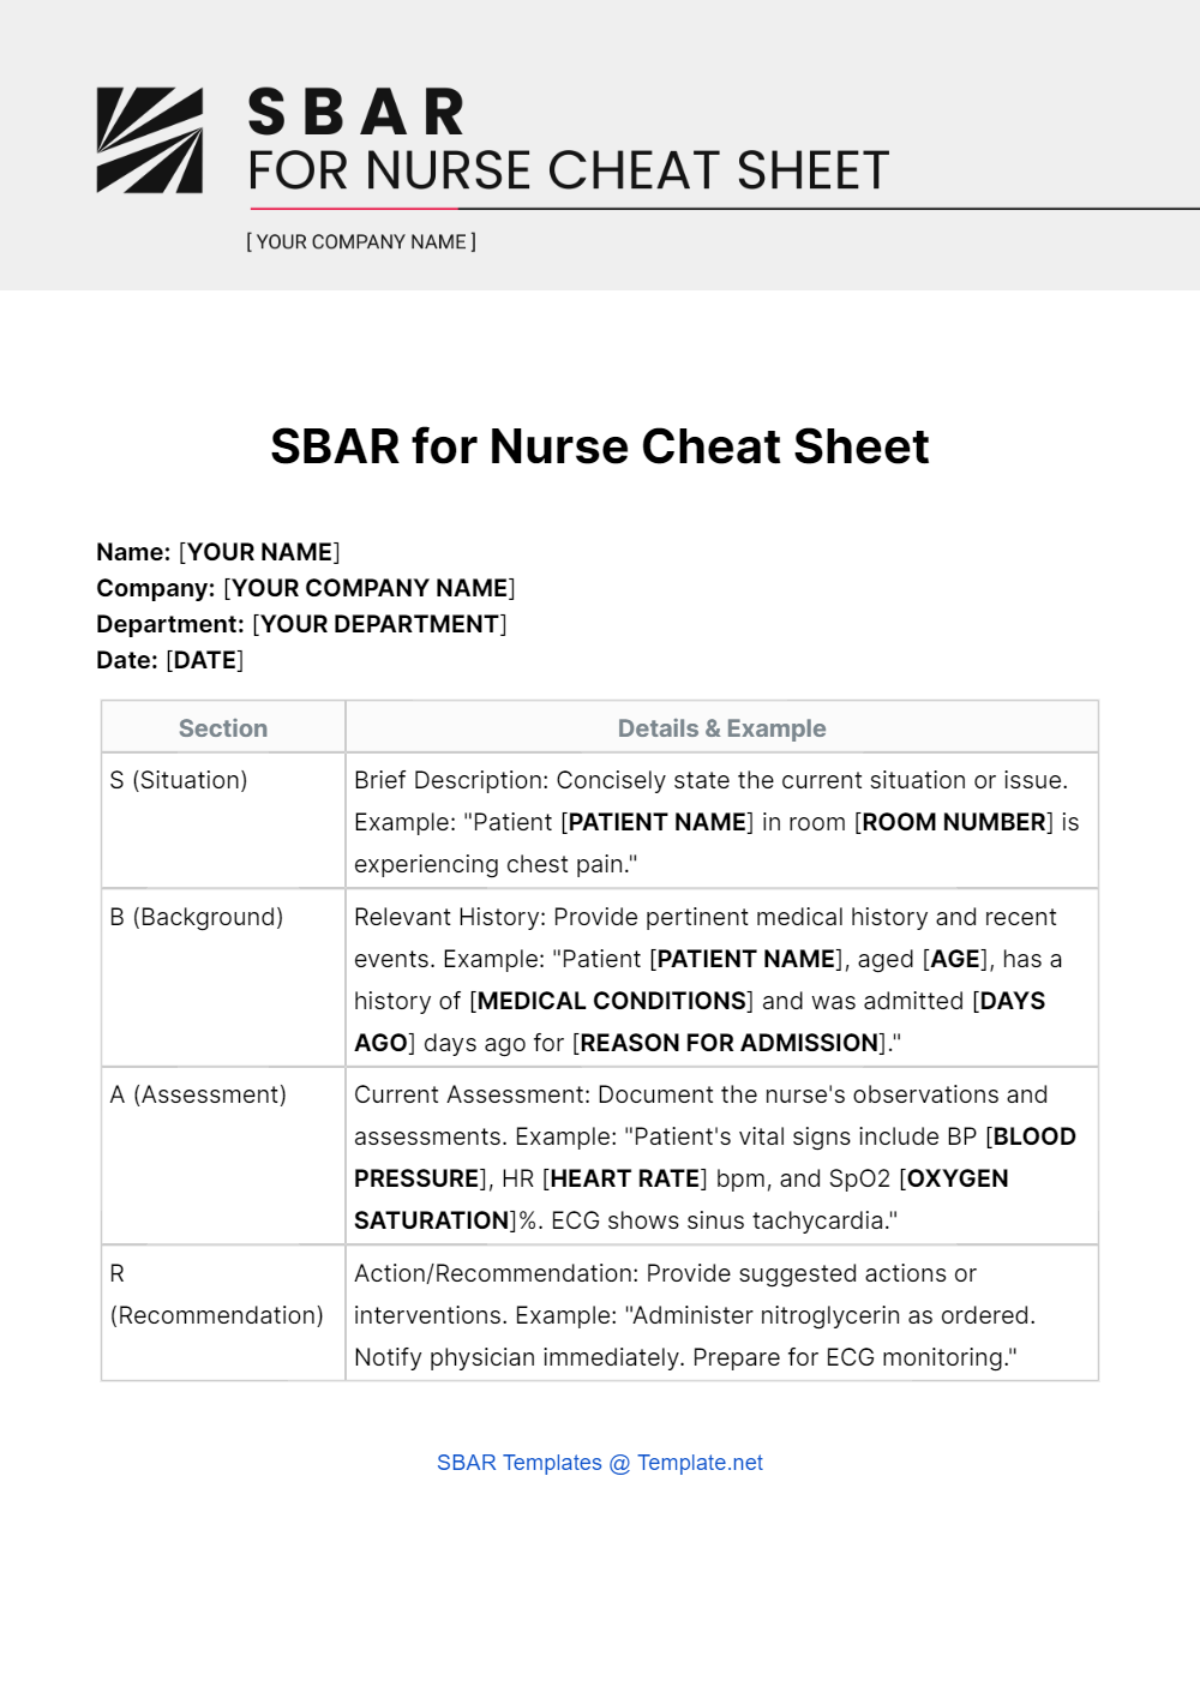 Free SBAR for Nurse Cheat Sheet Template